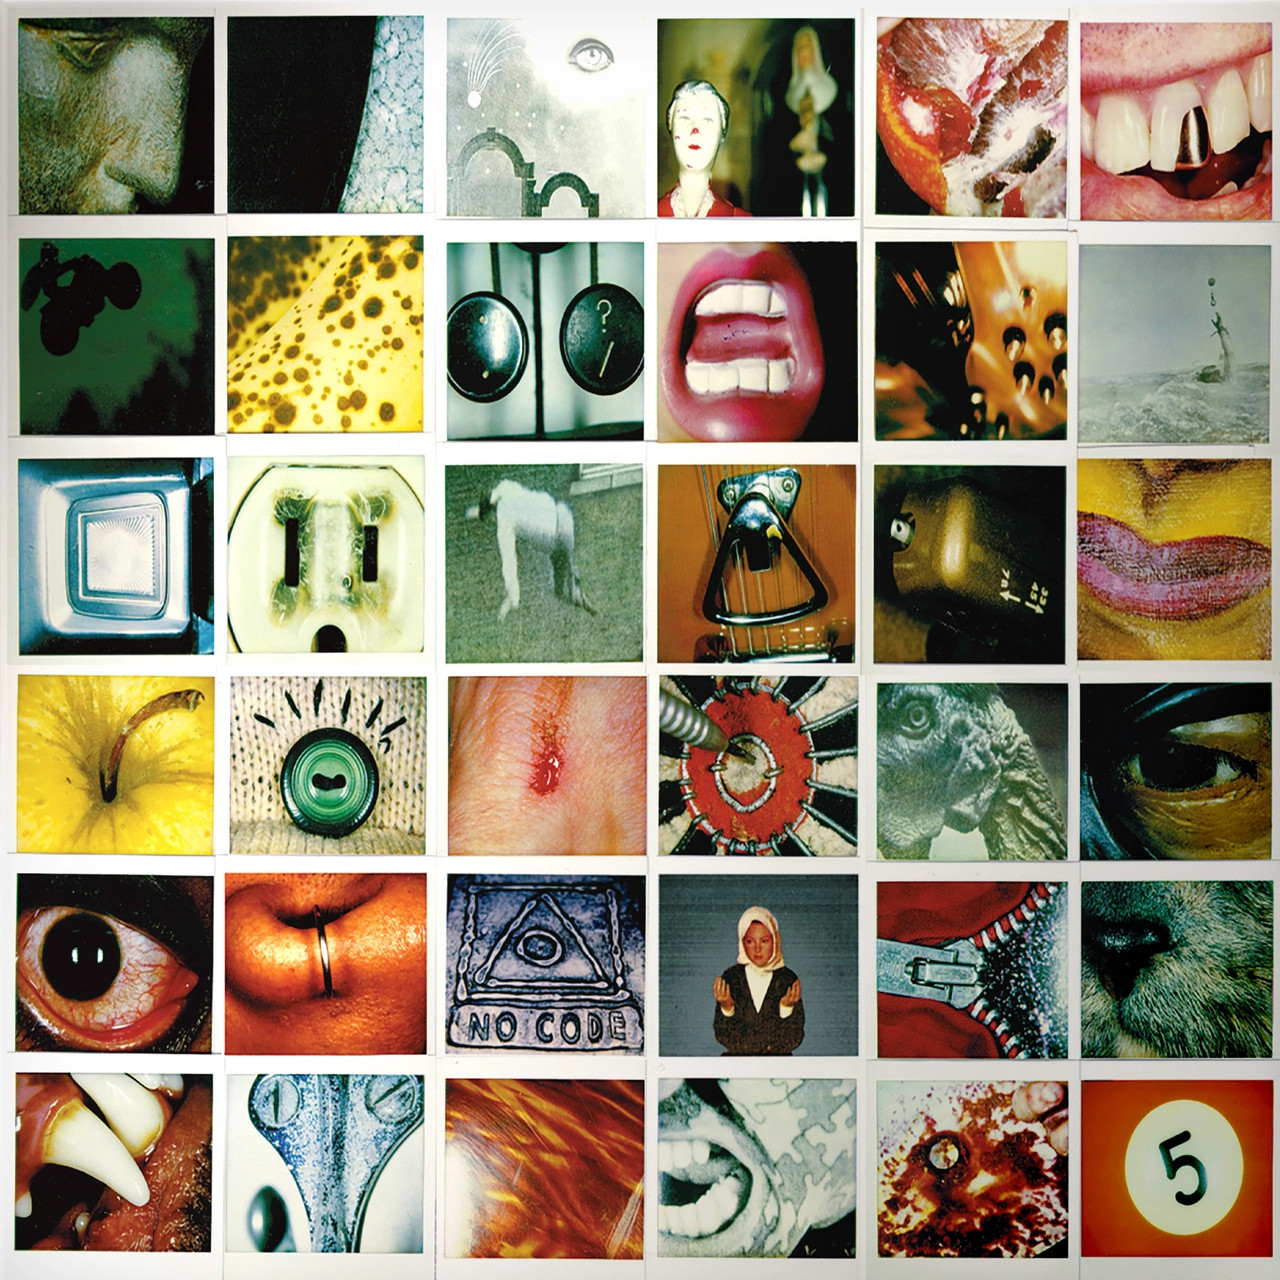 Pearl Jam - No Code (Vinyl LP)